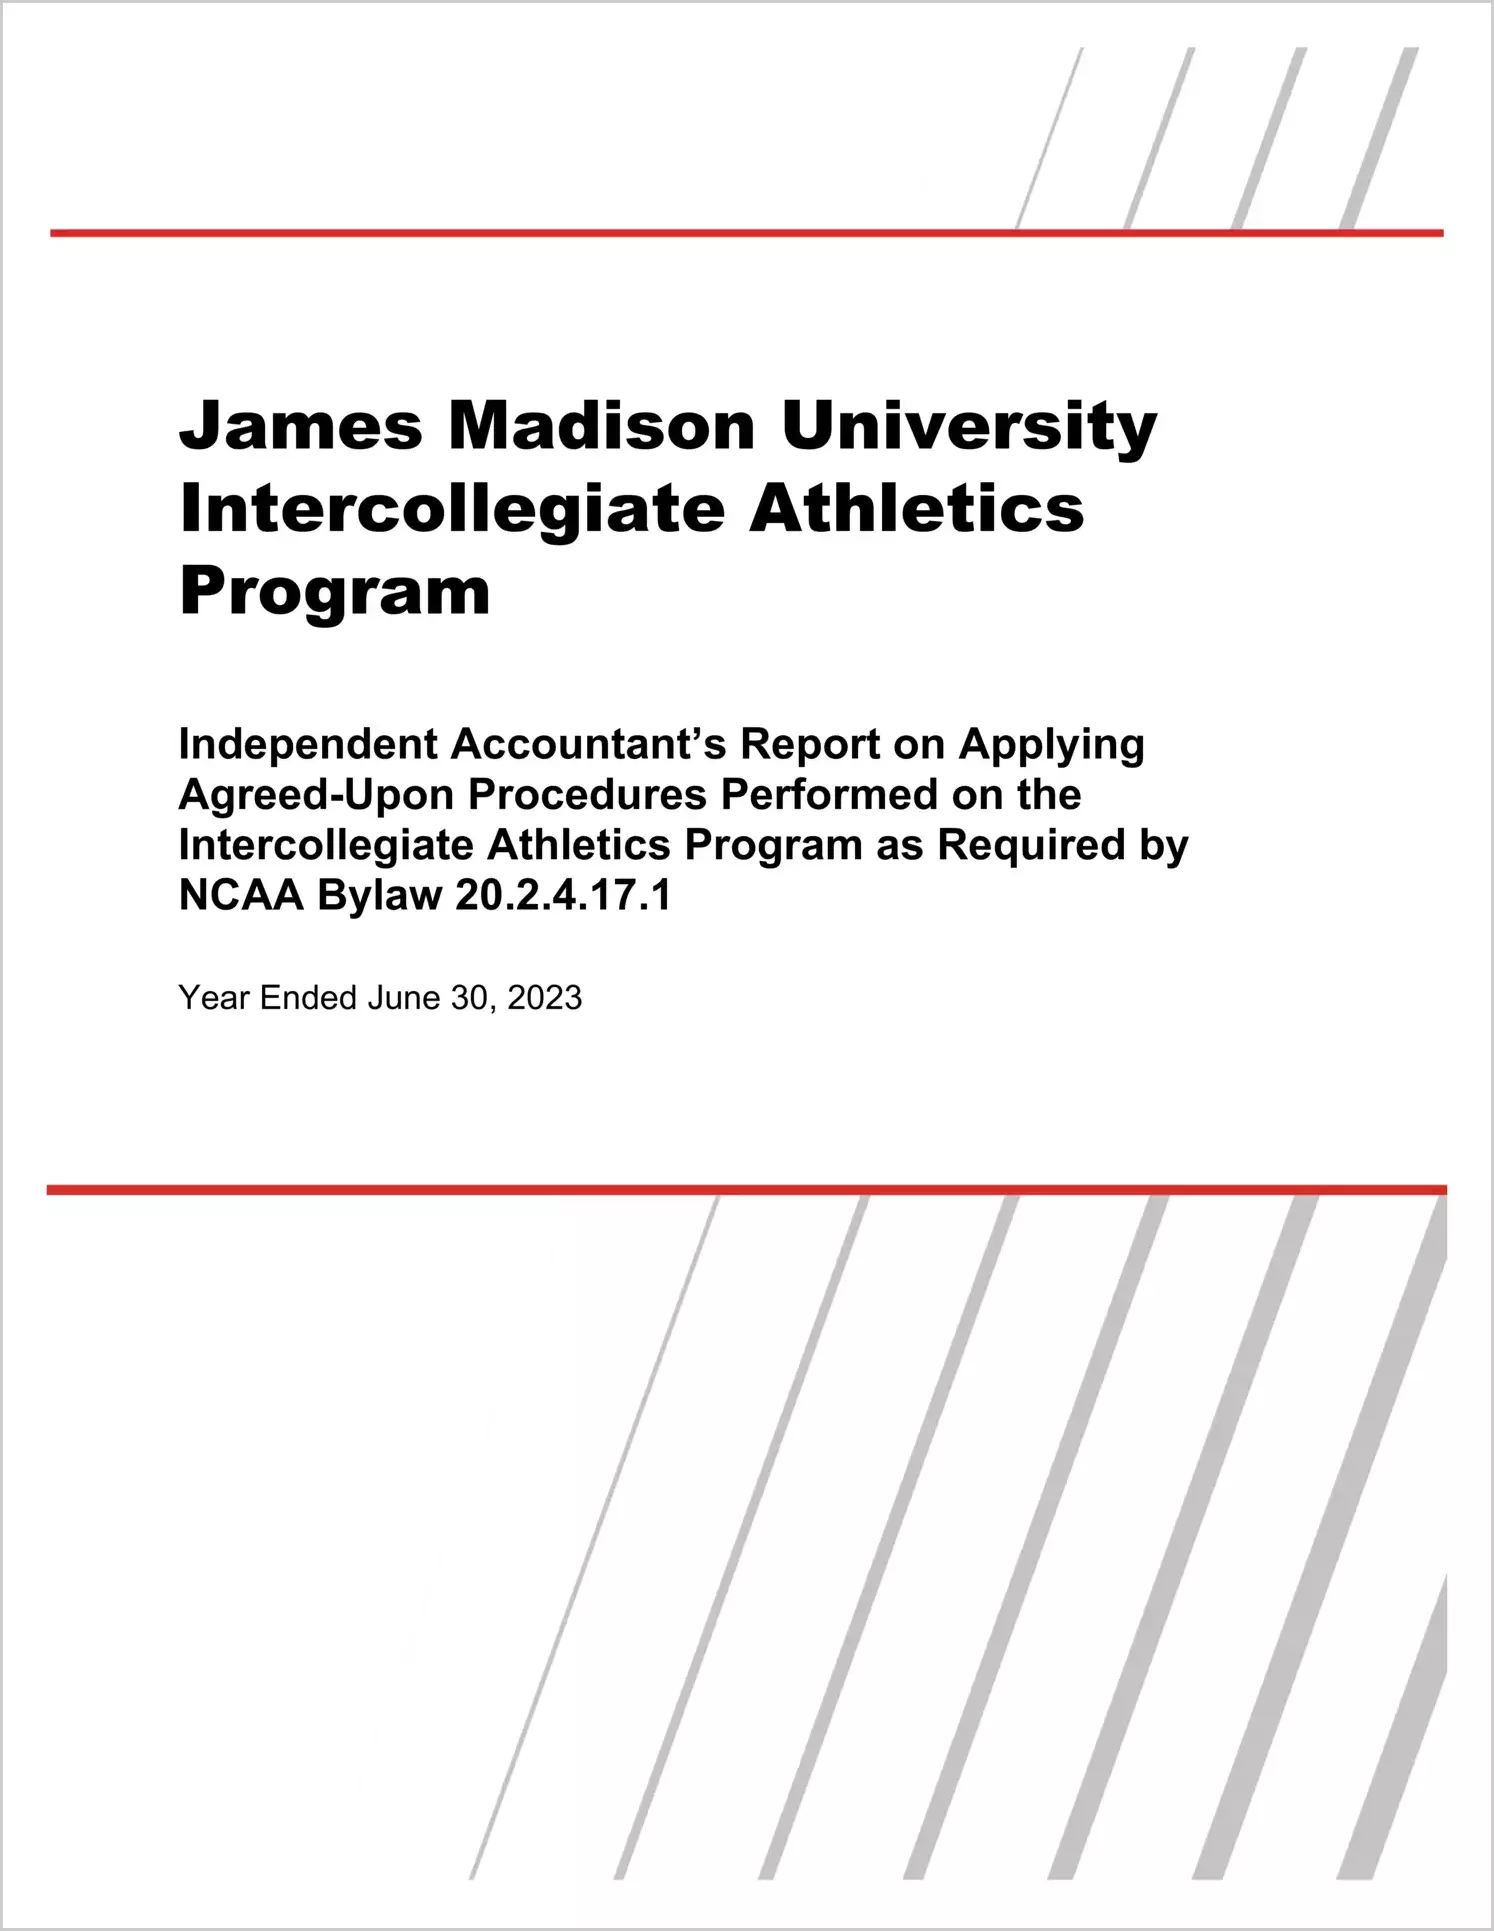 James Madison University Intercollegiate Athletics Programs for the year ended June 30, 2023